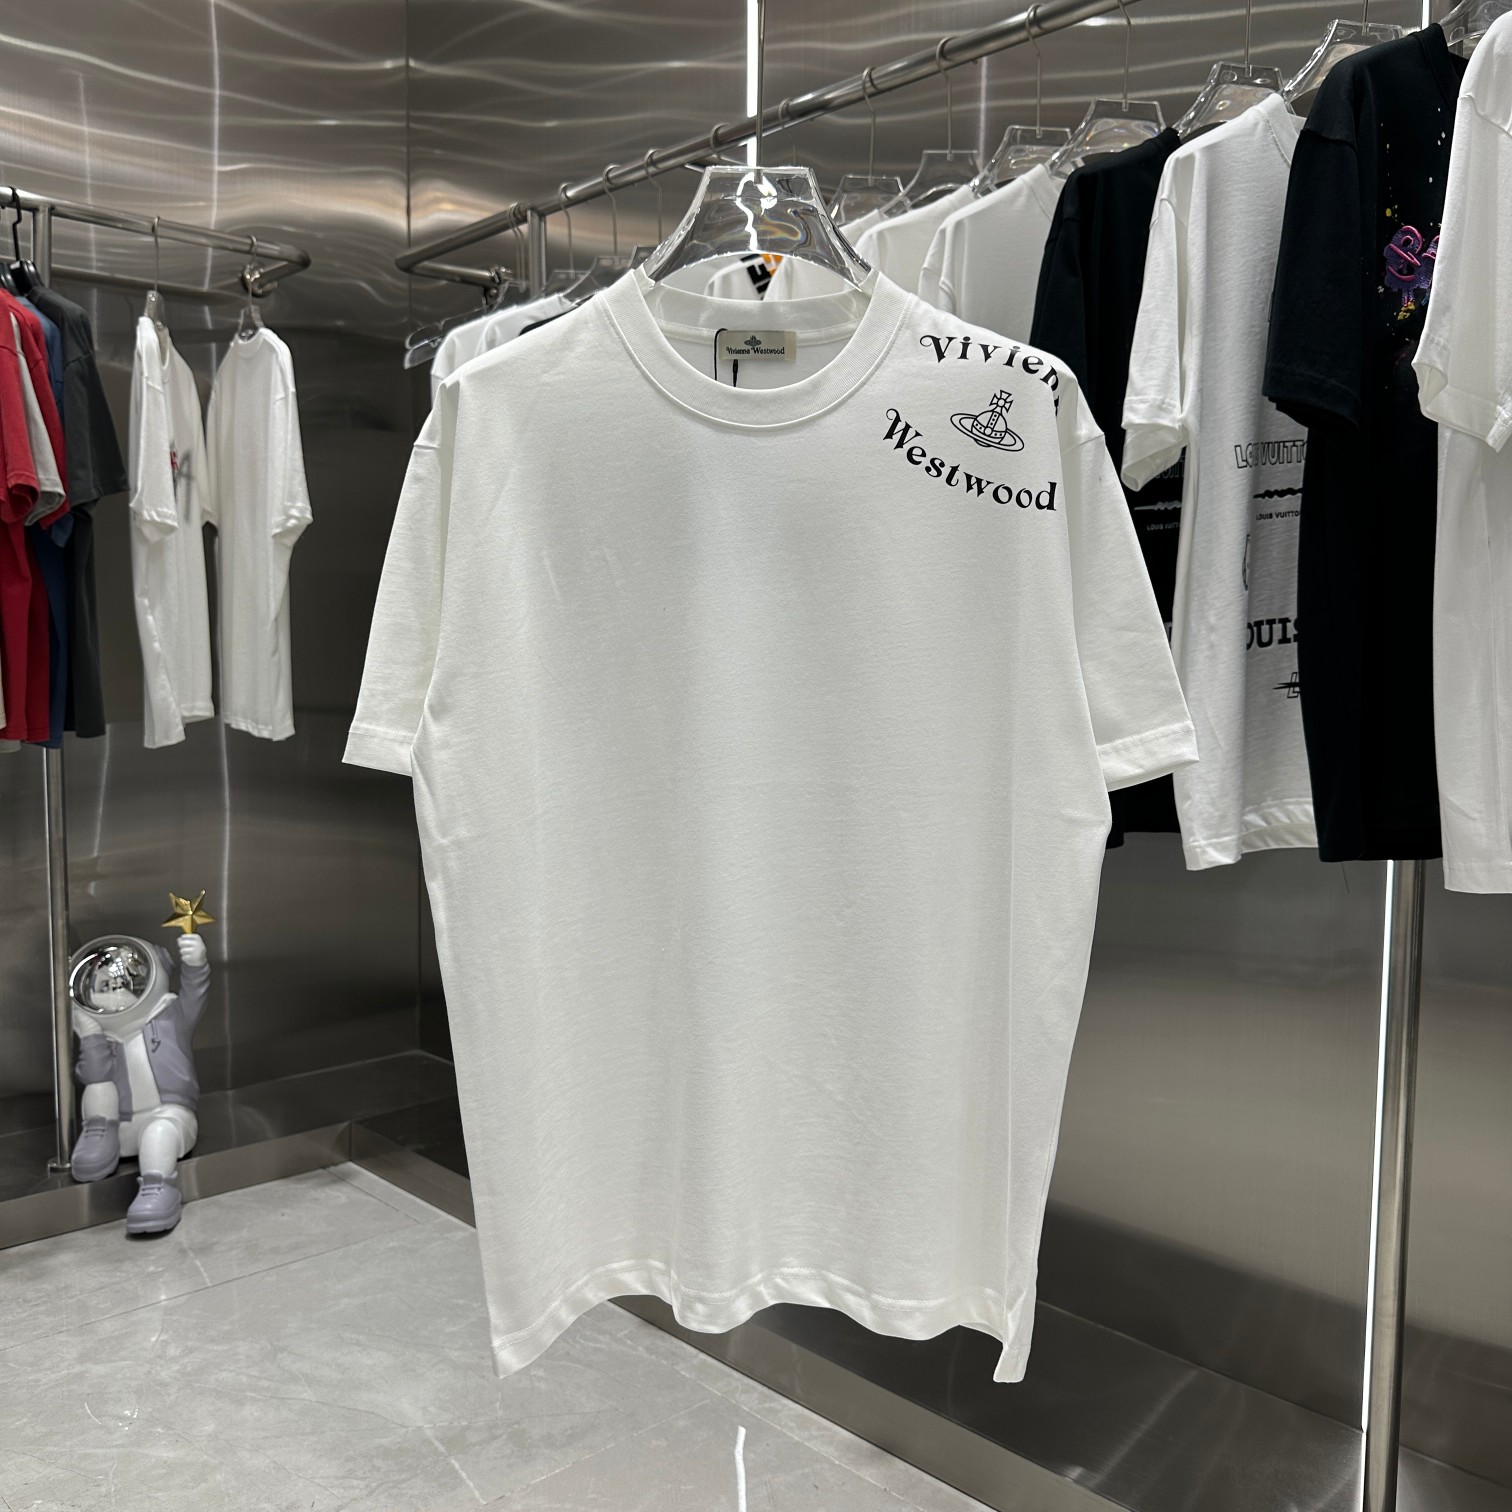 website to buy replica
 Vivienne Westwood Clothing T-Shirt Black White Printing Short Sleeve